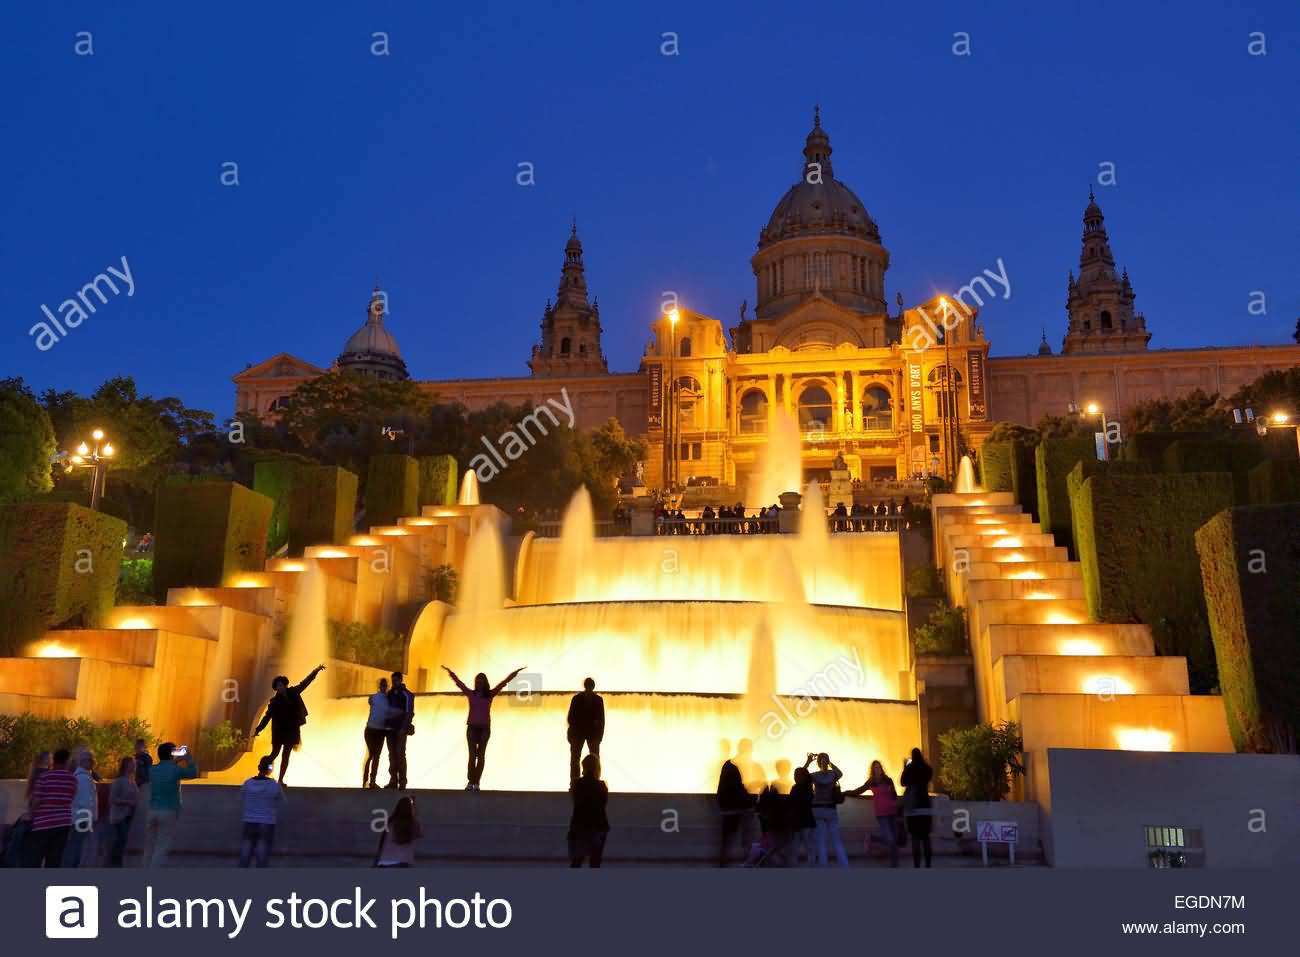 Illuminated Fountain And Palau Nacional At Night